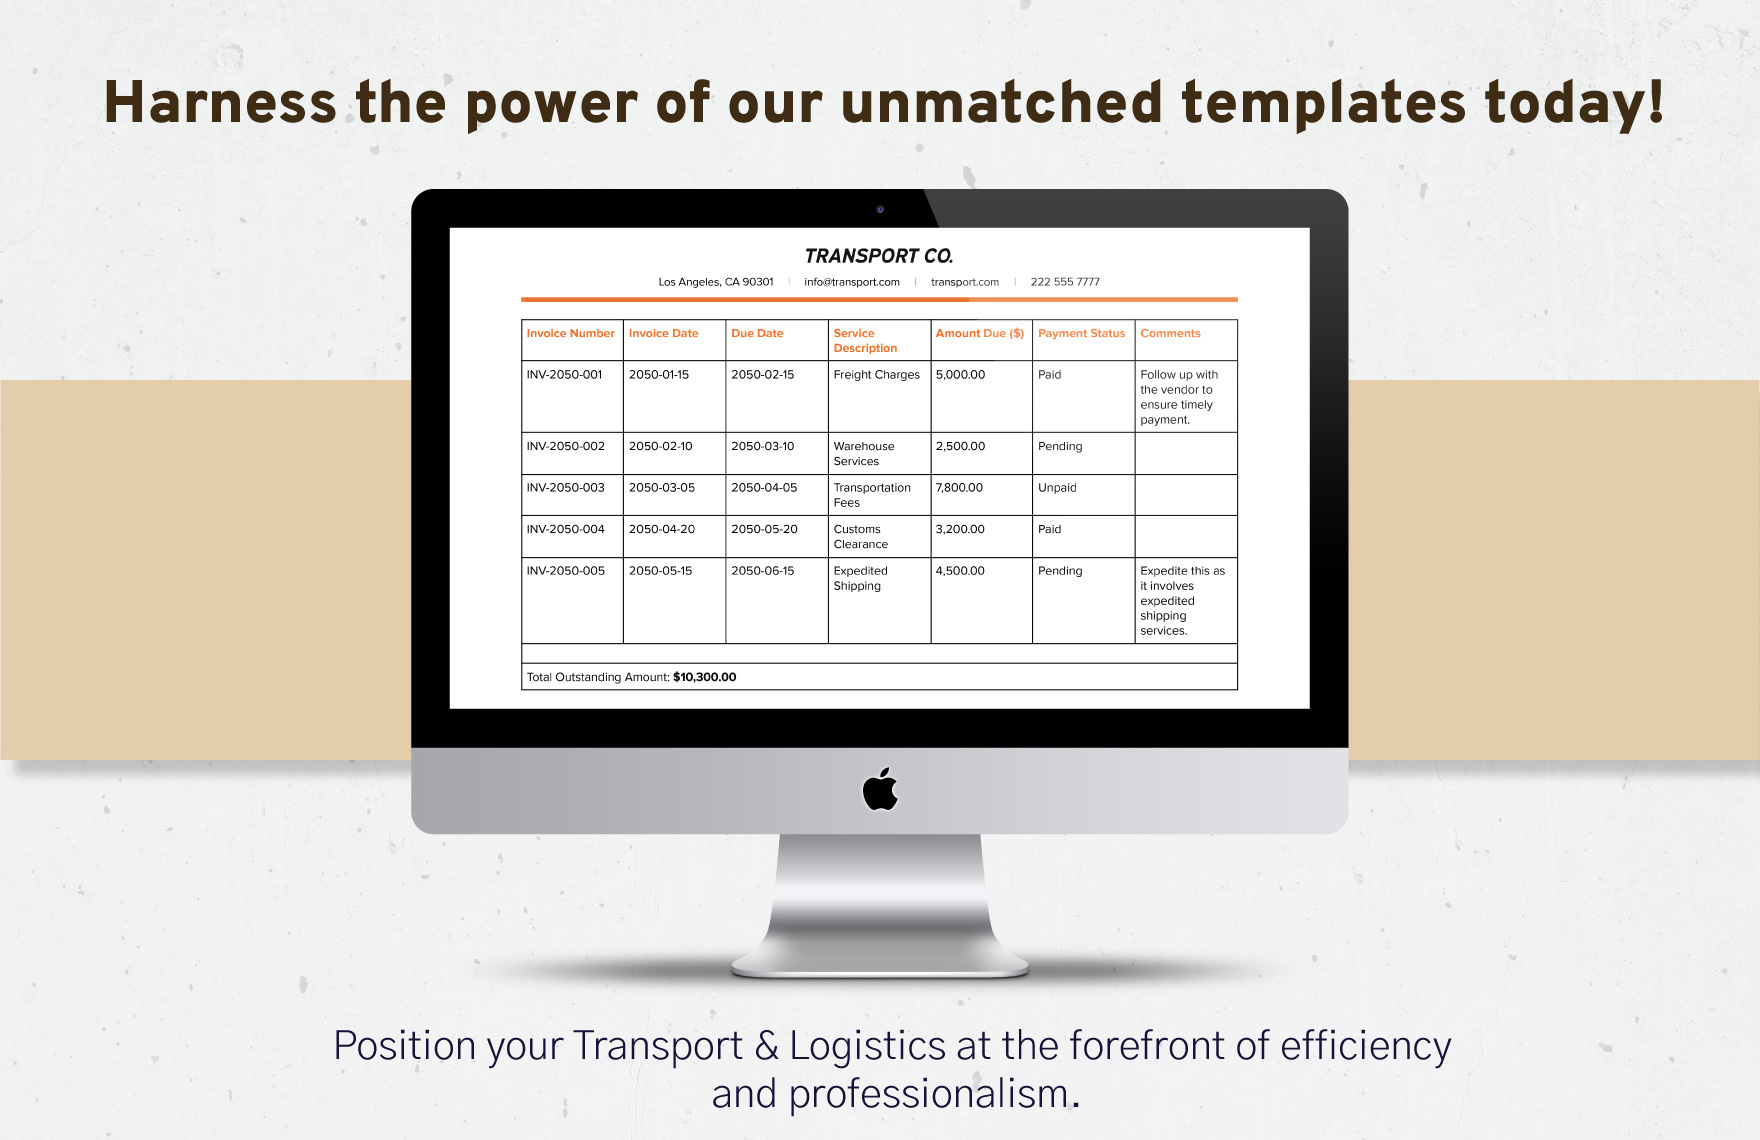 Transport and Logistics Vendor Payment Record Template